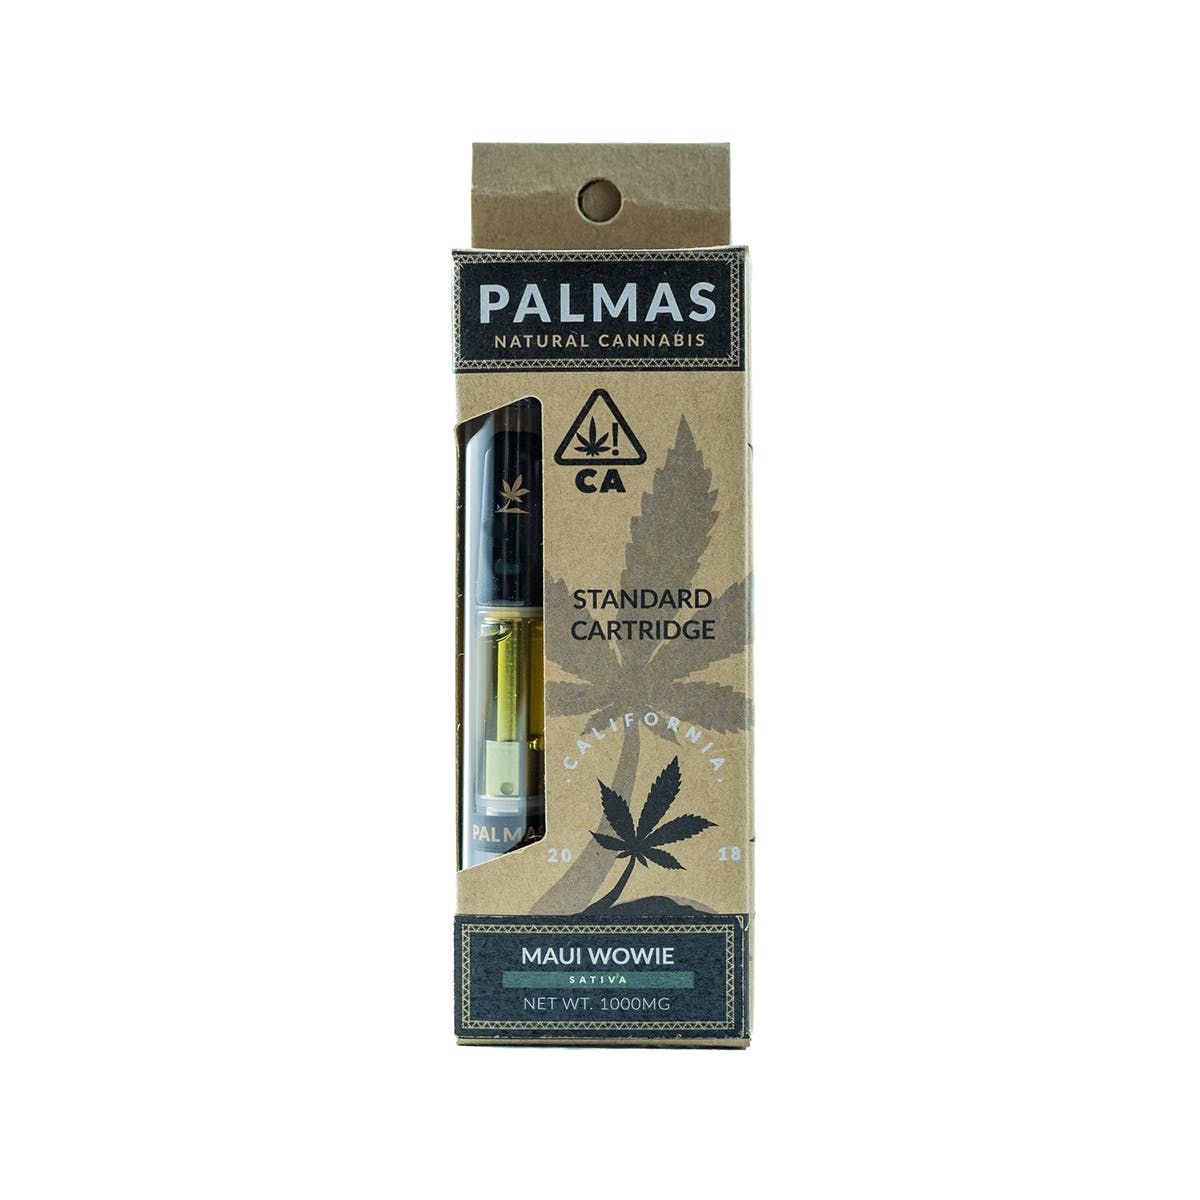 marijuana-dispensaries-gold-20-cap-collective-in-los-angeles-palmas-standard-cartridge-maui-wowie